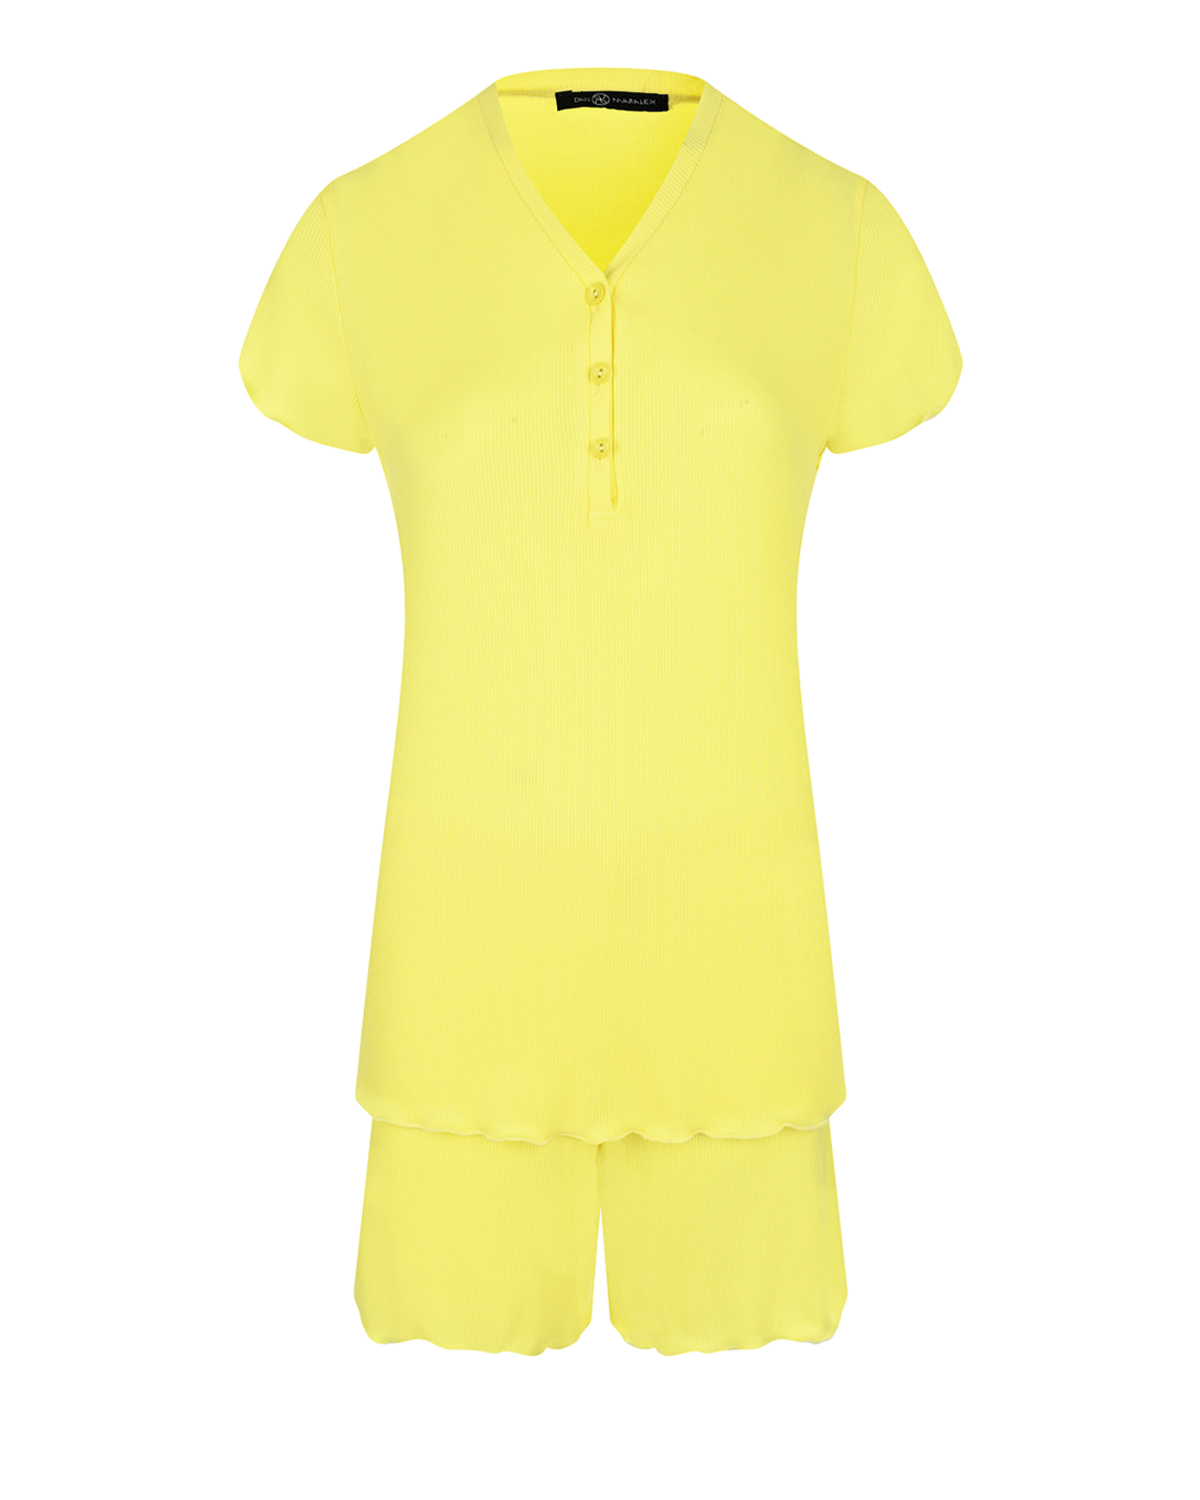 Желтая пижама: футболка и шорты Dan Maralex, размер 46, цвет желтый - фото 1